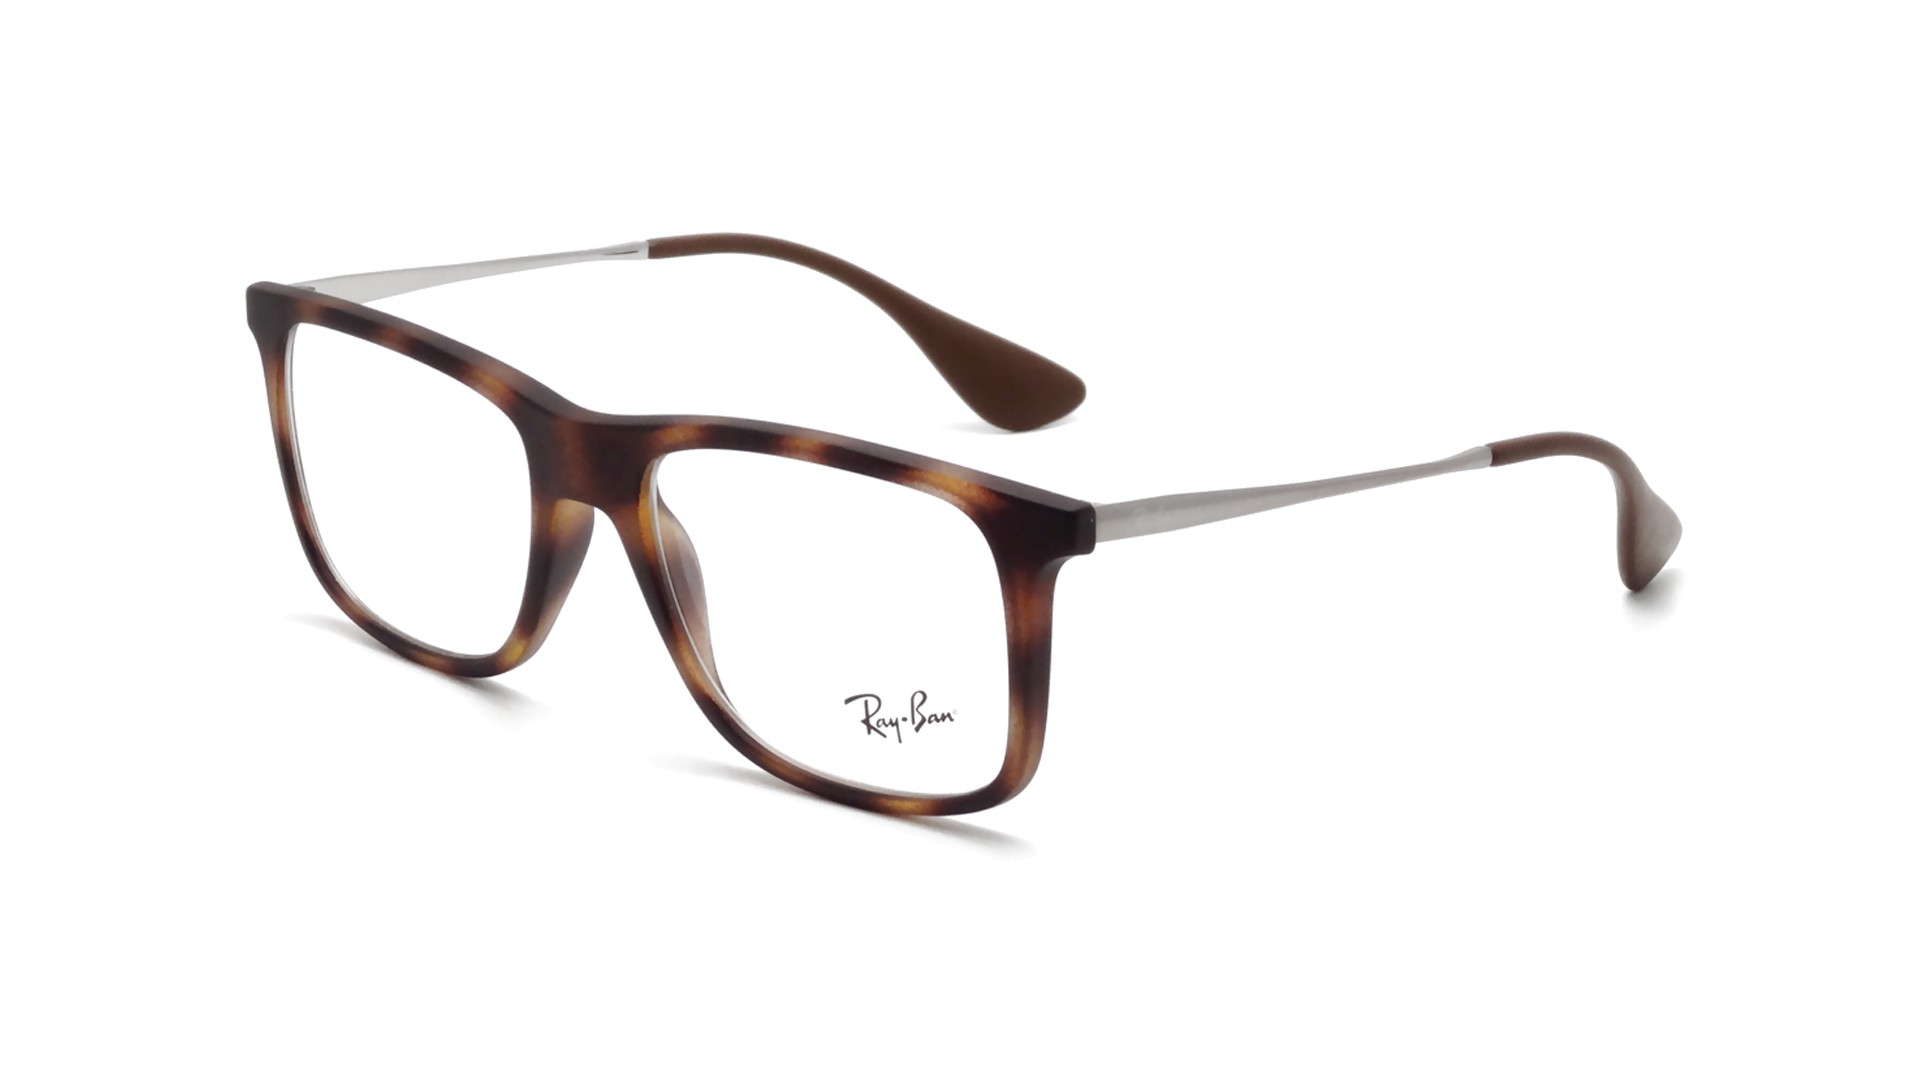 tiffany eyeglass frames at costco